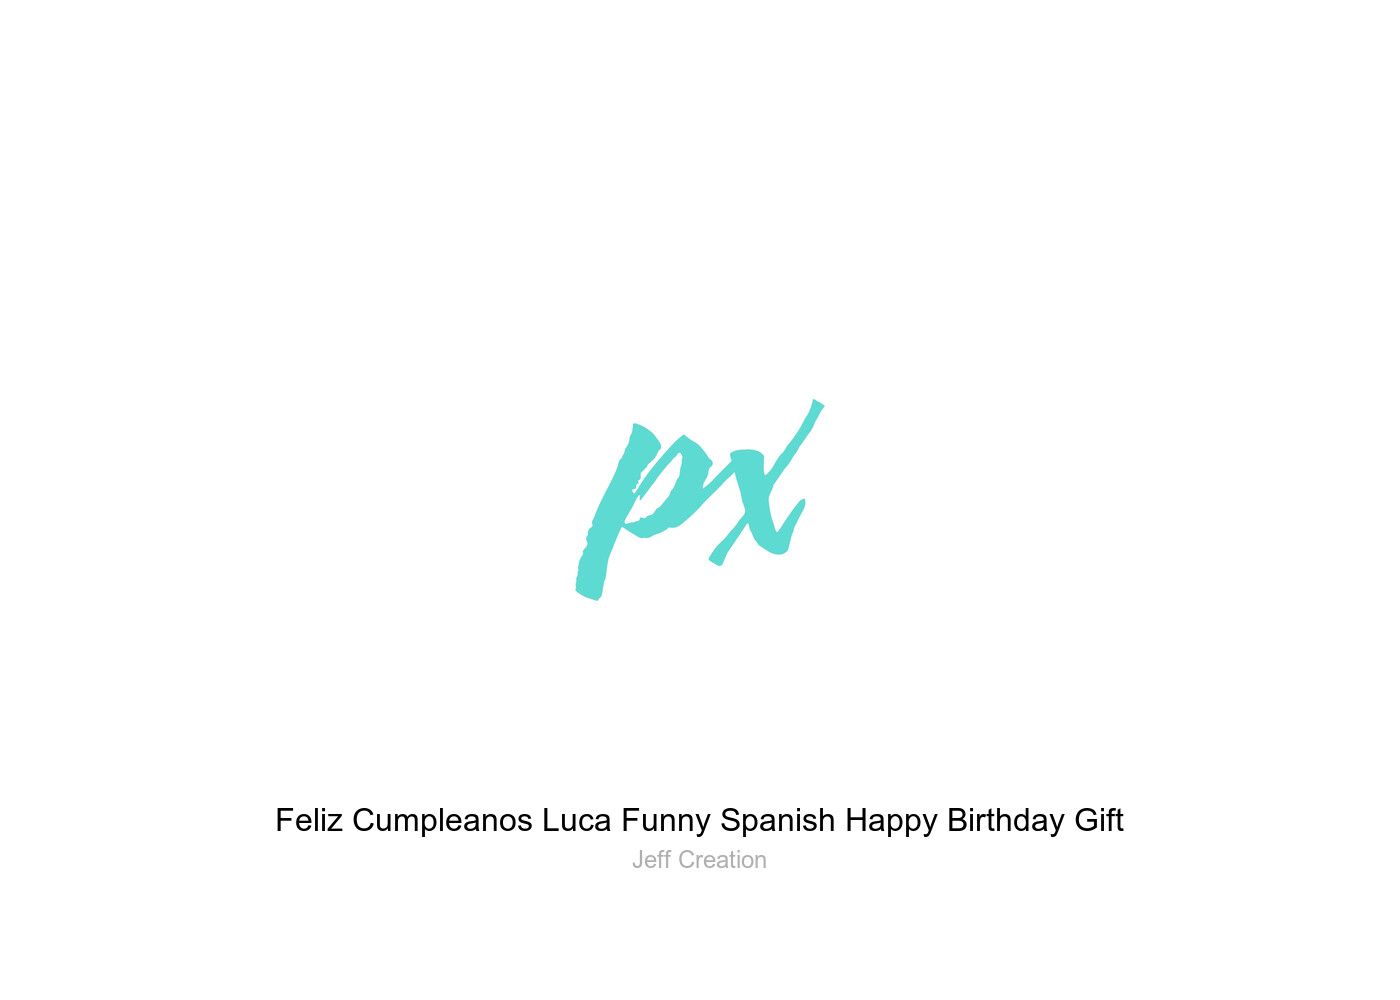 Feliz Cumpleanos Luca Funny Spanish Happy Birthday Gift Greeting Card by  Jeff Creation